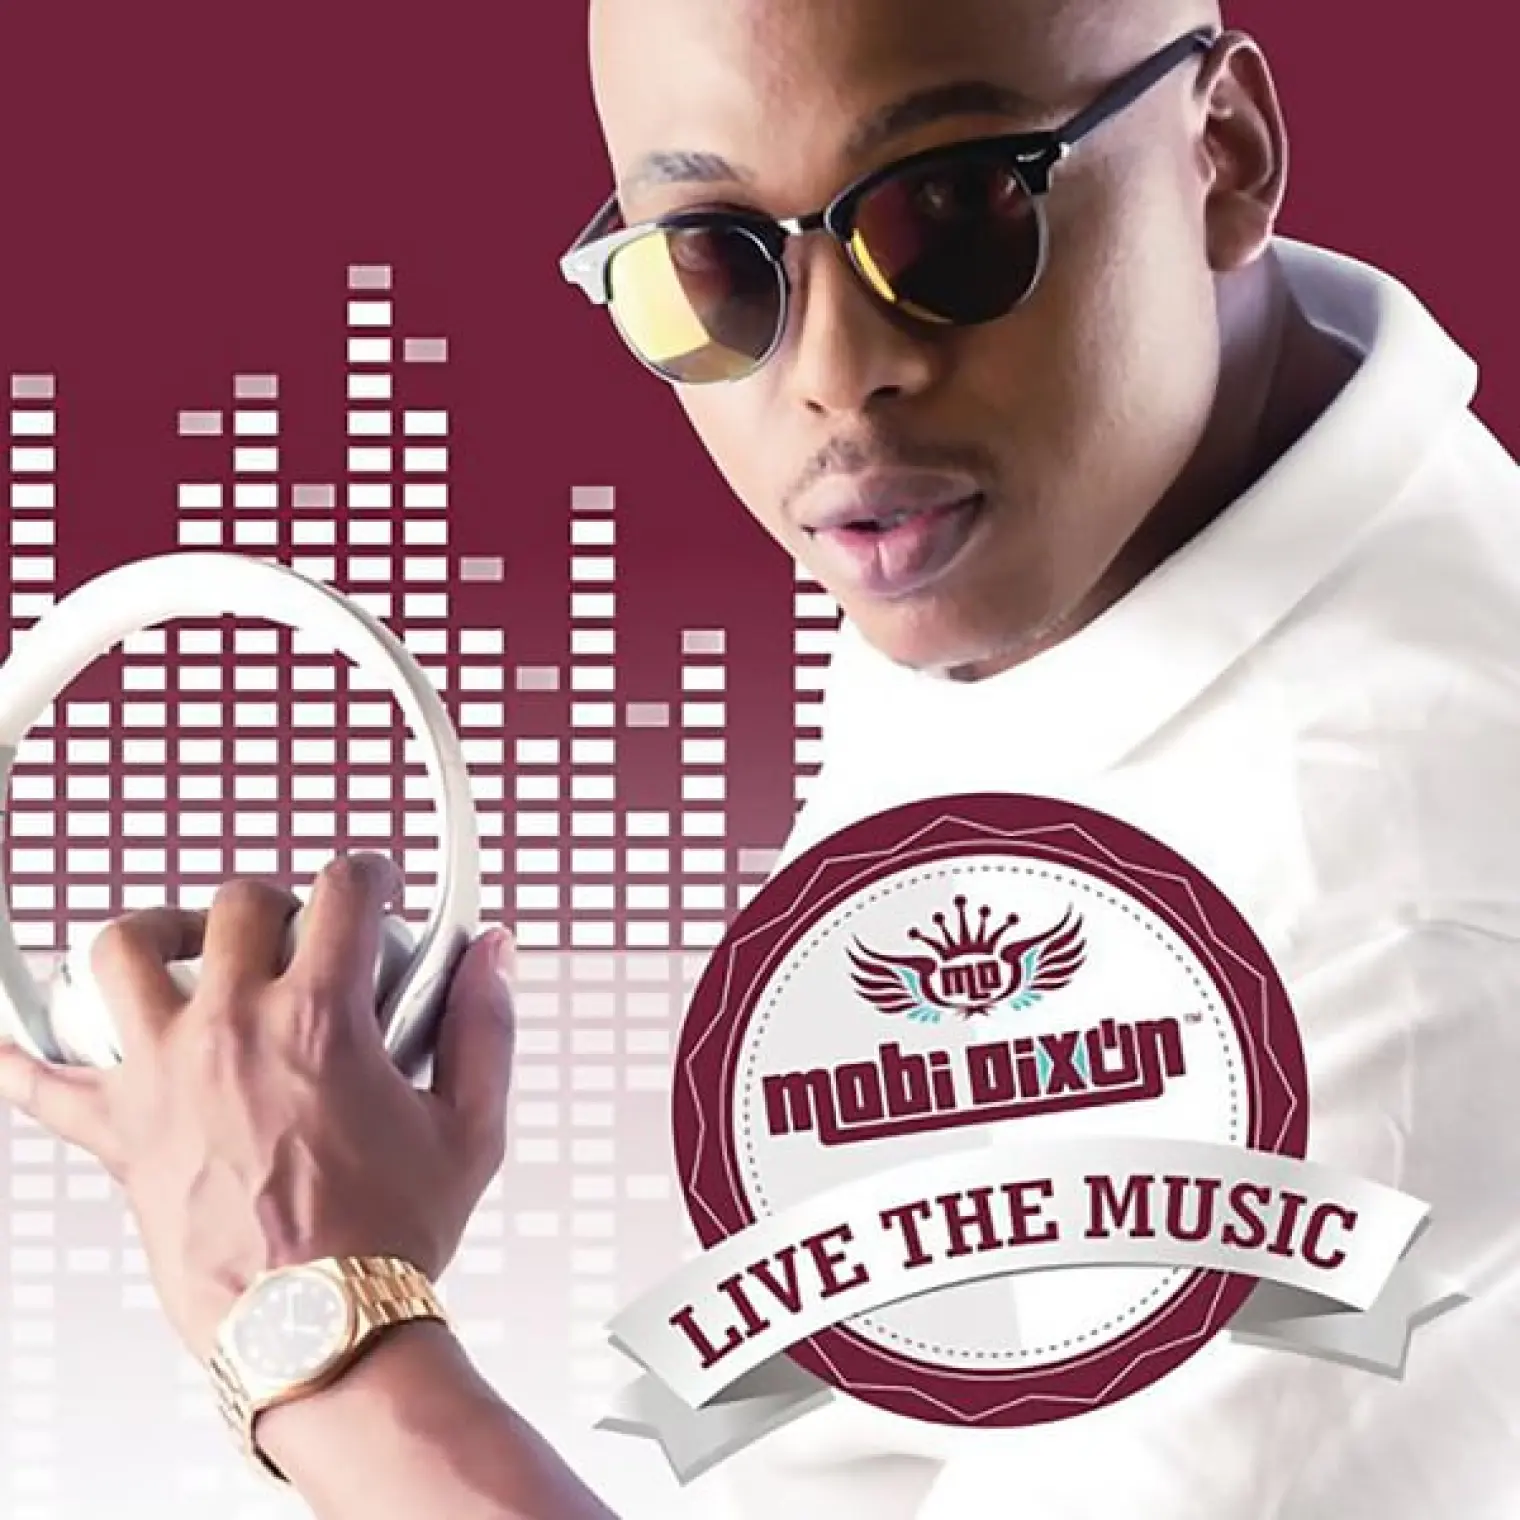 Live The Music -  Mobi Dixon 